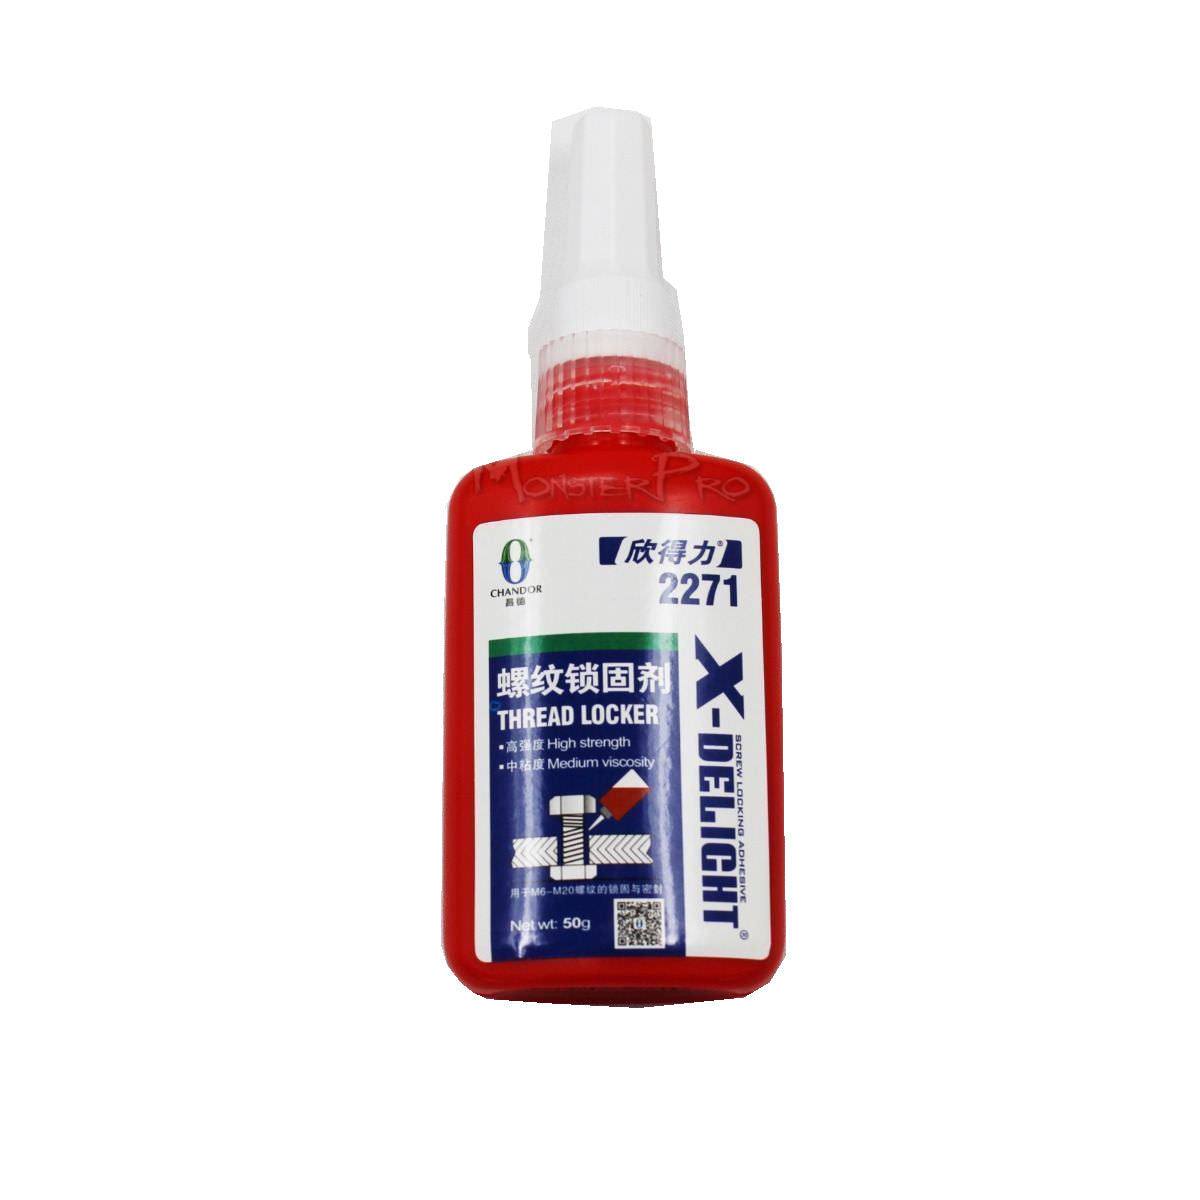 2 x Thread Locker Adhesive Sealant Glue Screw use Locktite Prevent Oxidation - TDRMOTO